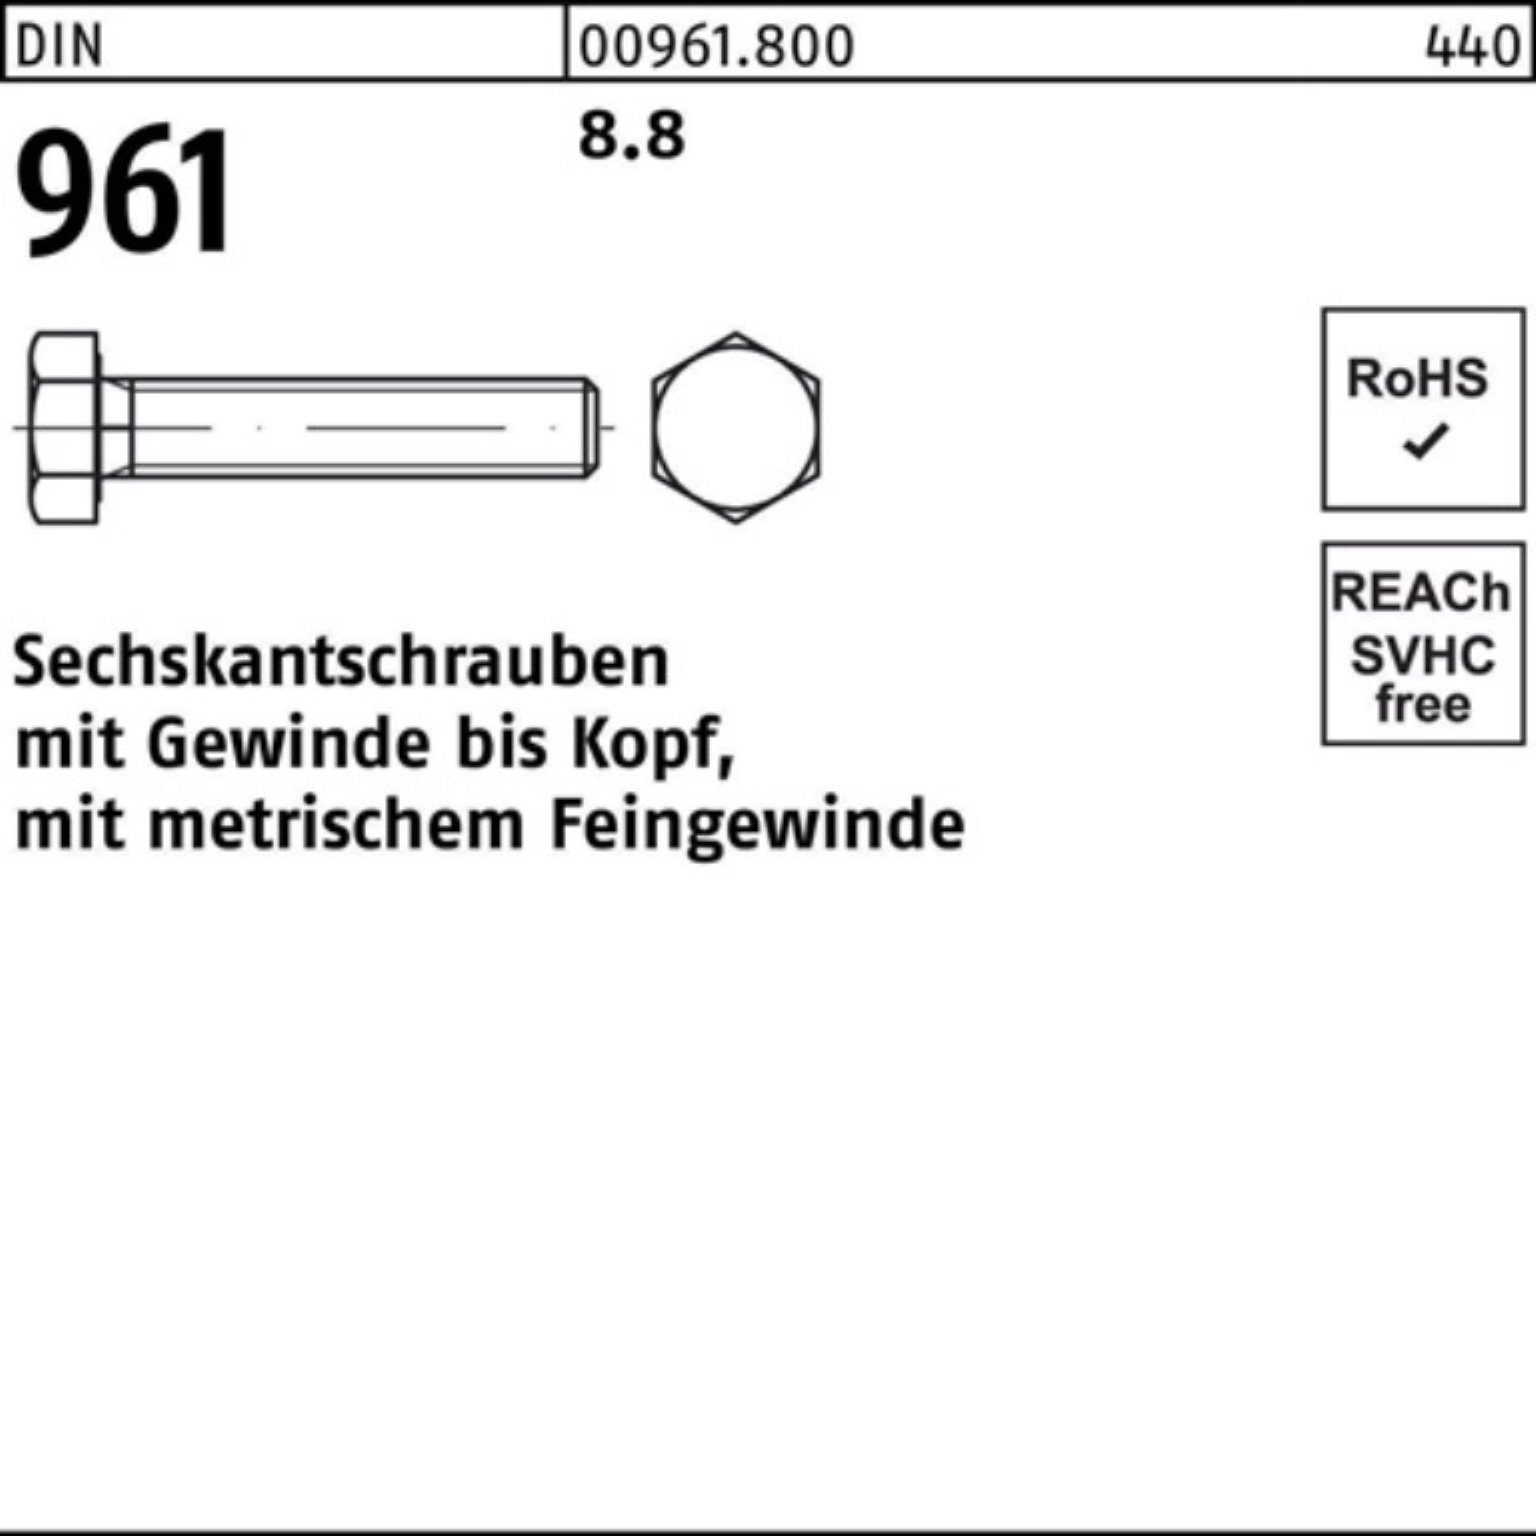 Reyher Sechskantschraube 100er Pack 961 Stück VG 100 Sechskantschraube DIN M10x1,25x 40 DI 8.8